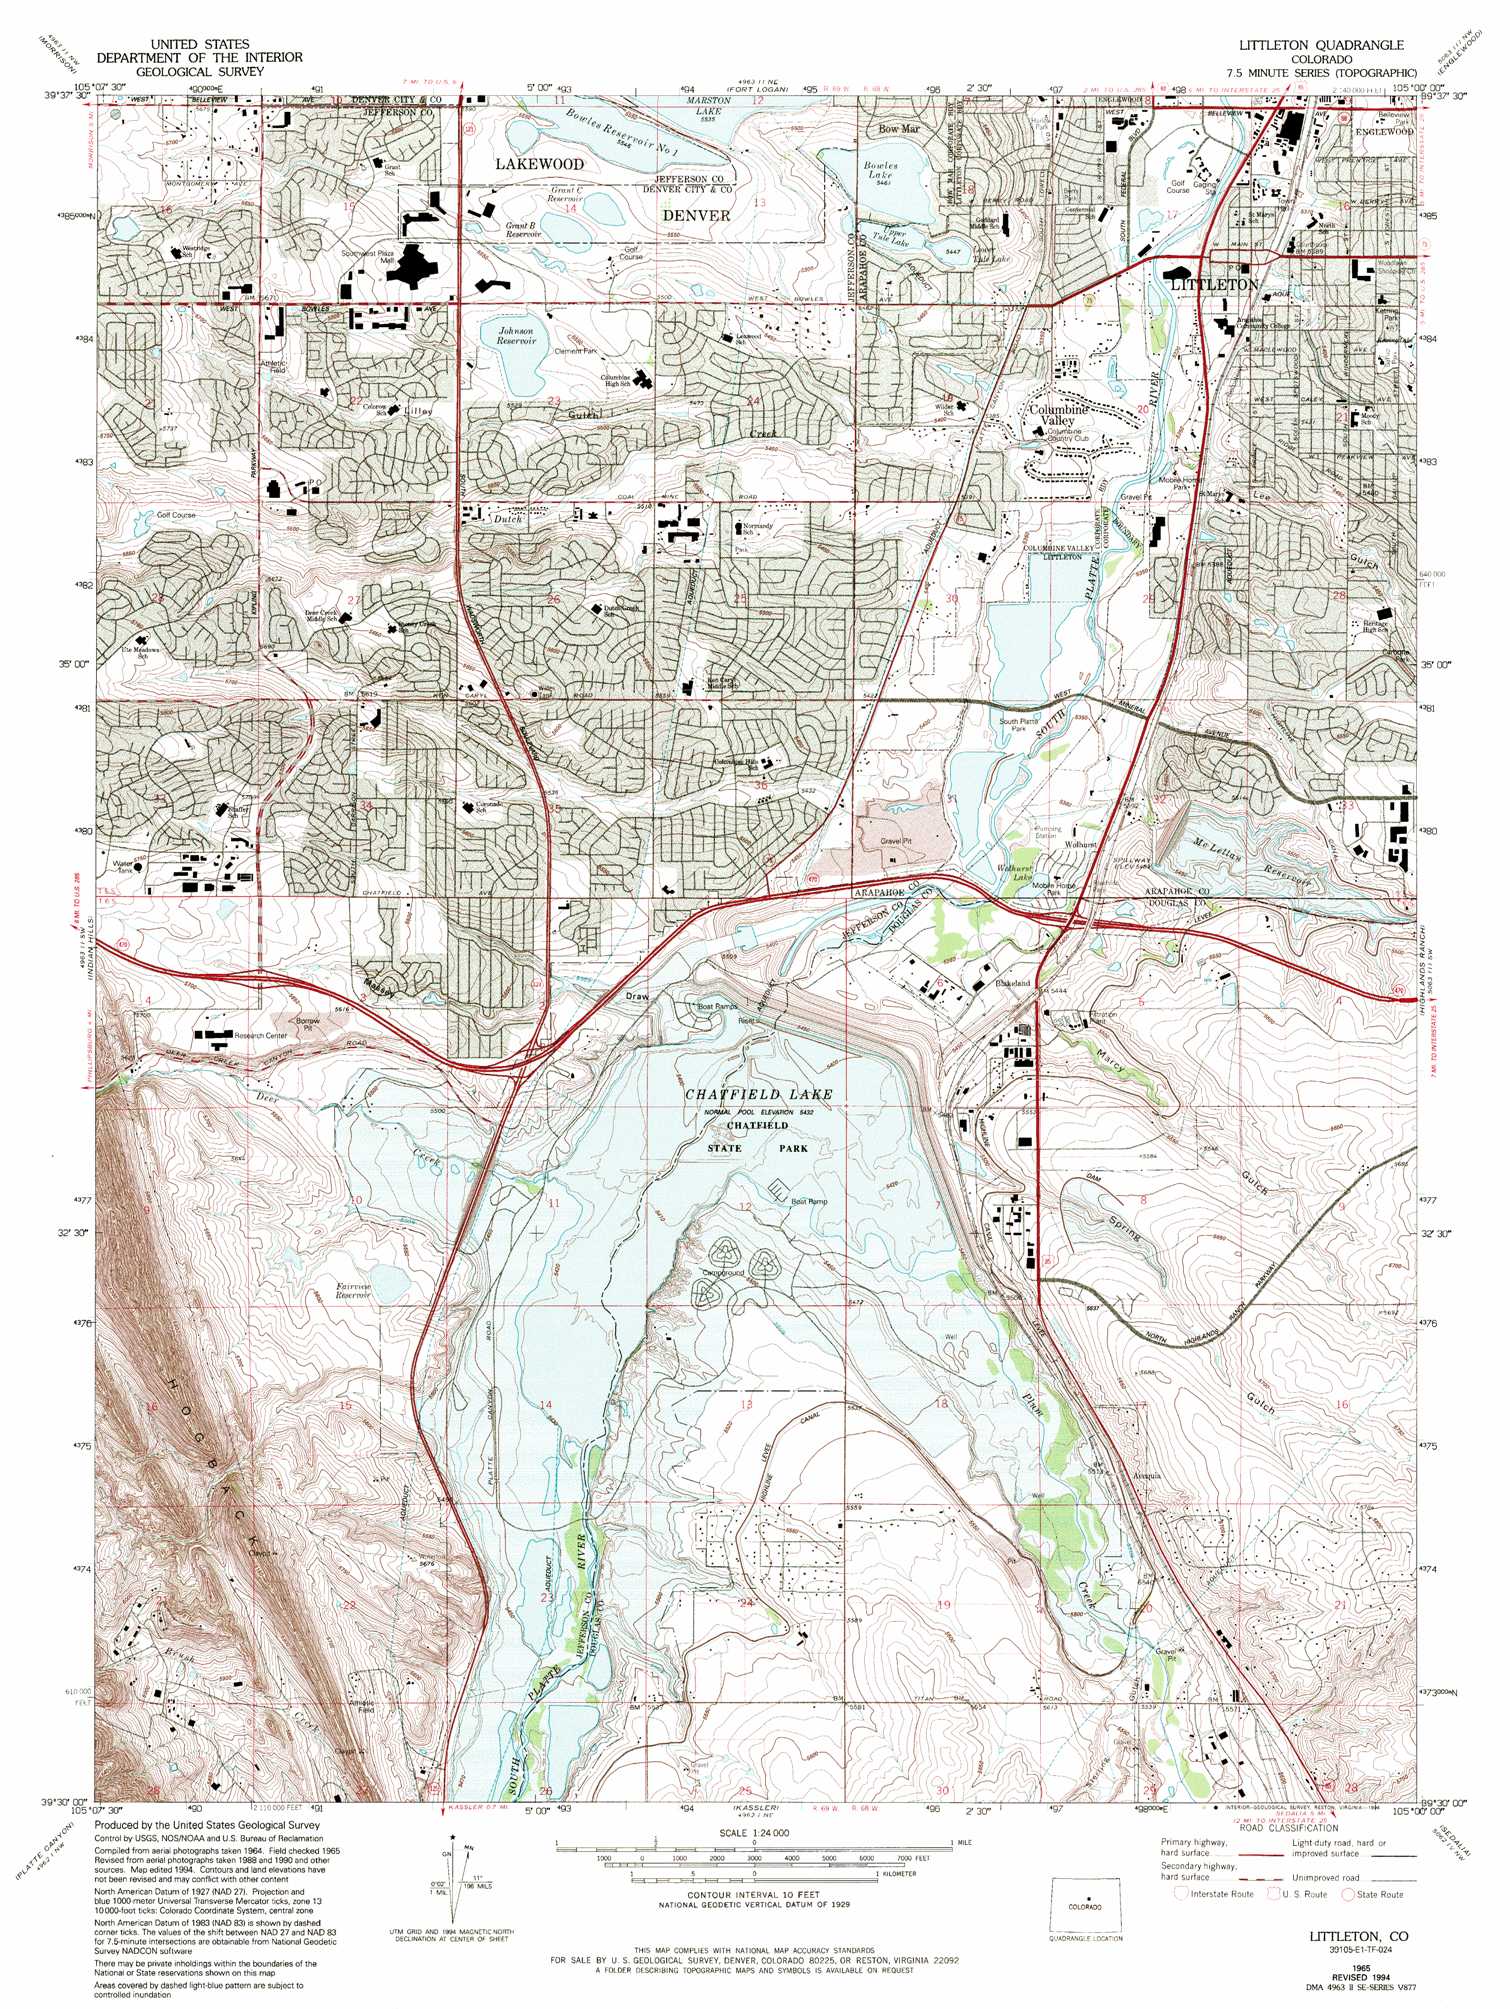 Littleton topographic map, CO - USGS Topo Quad 39105e1